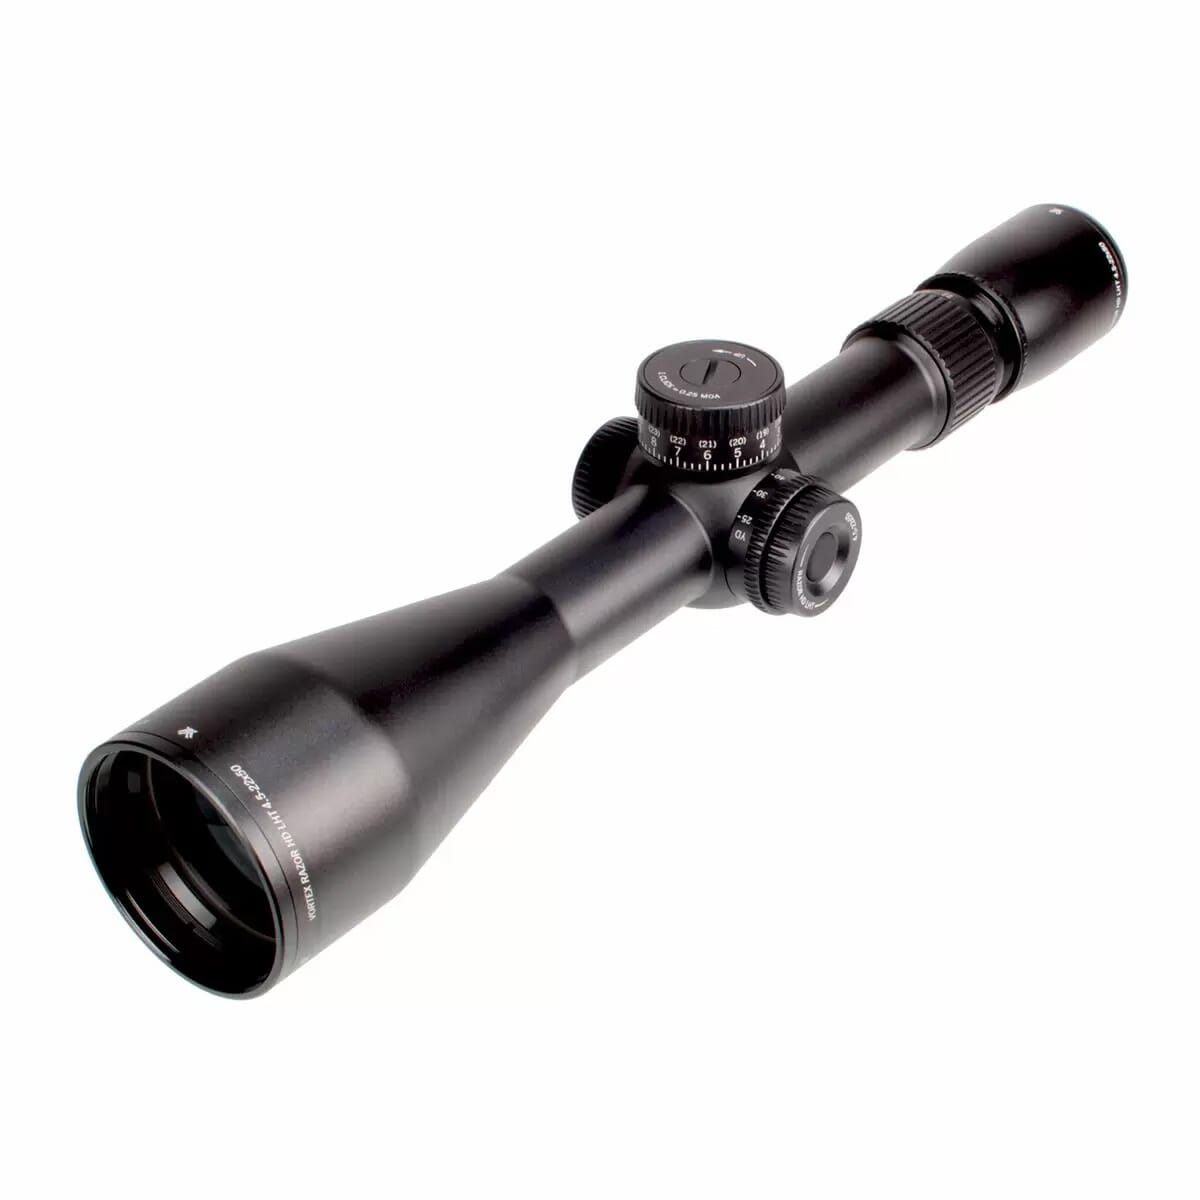 Vortex Razor HD LHT 4.5-22x50 FFP XLR-2 MOA Riflescope RZR-42201